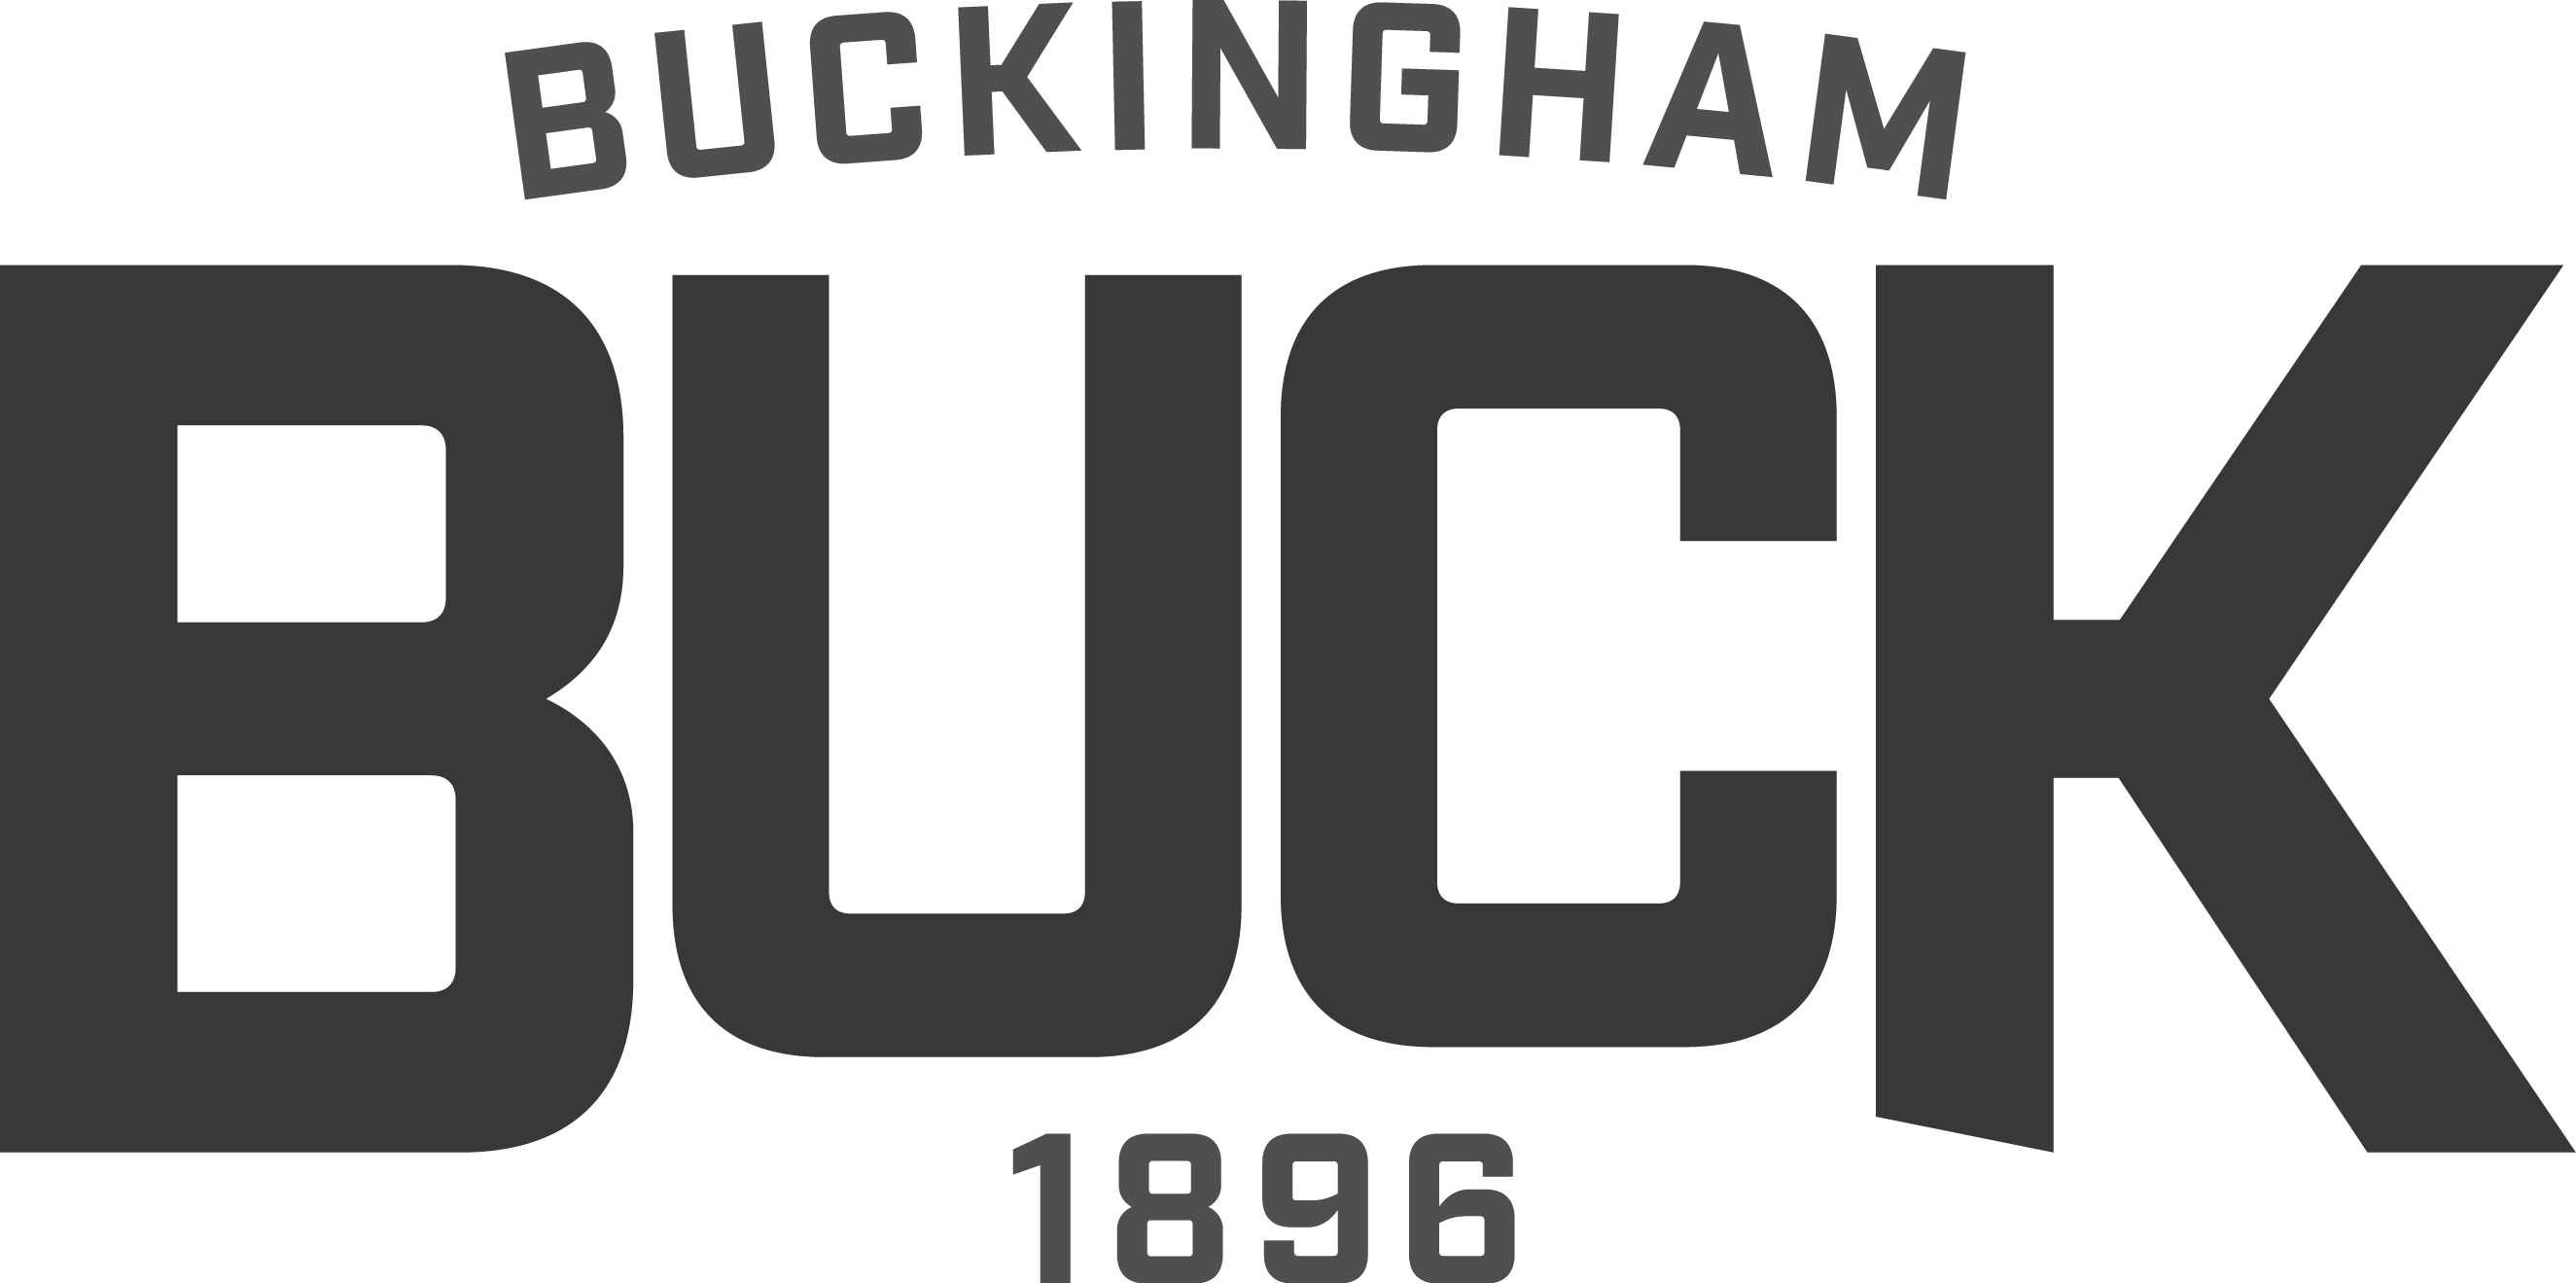 Buckingham Buck 1896